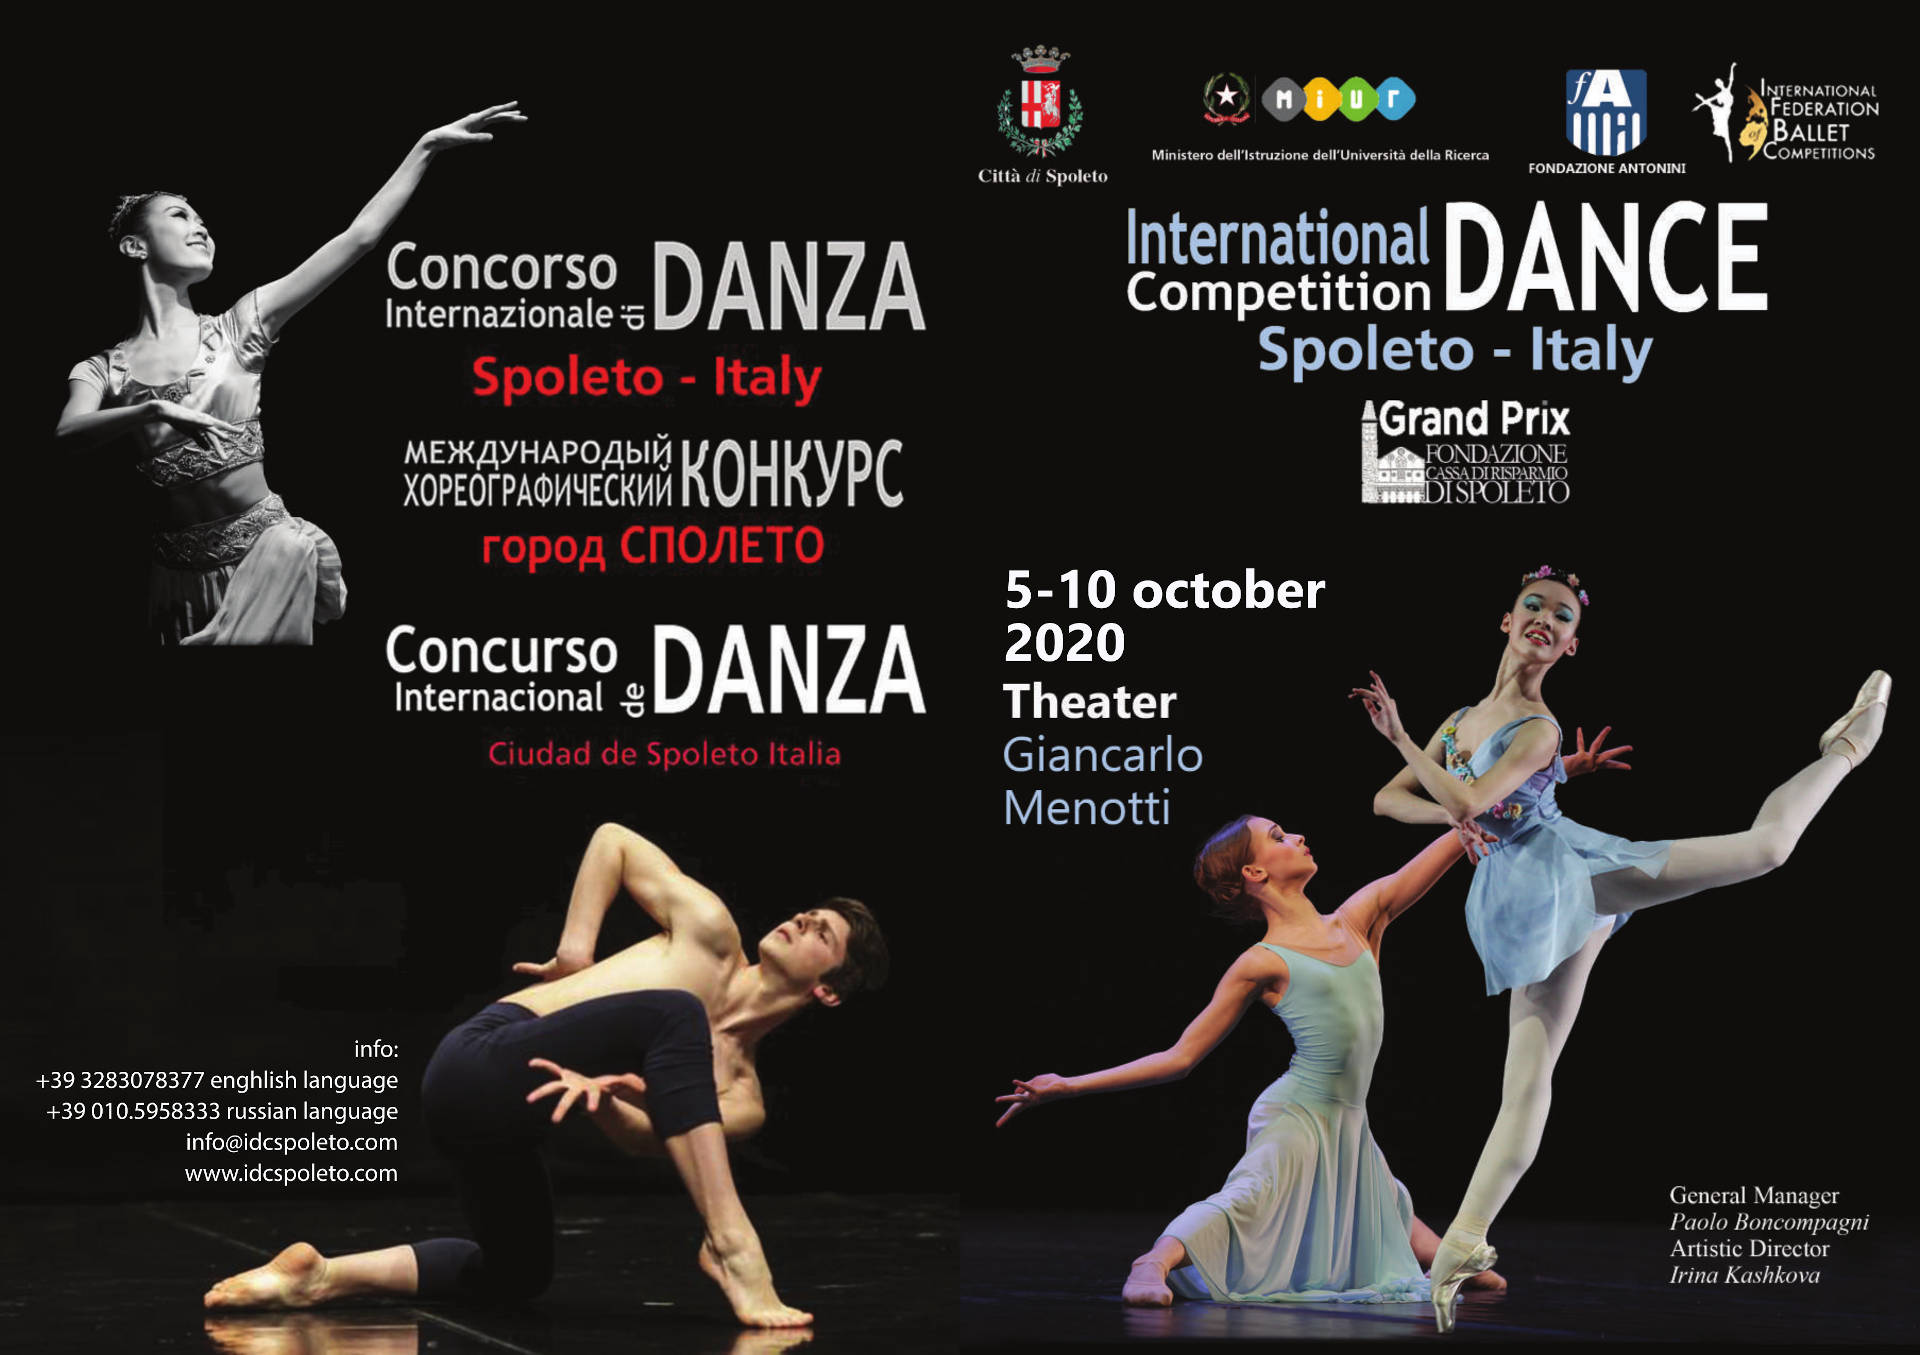 Spoleto International Dance Competition